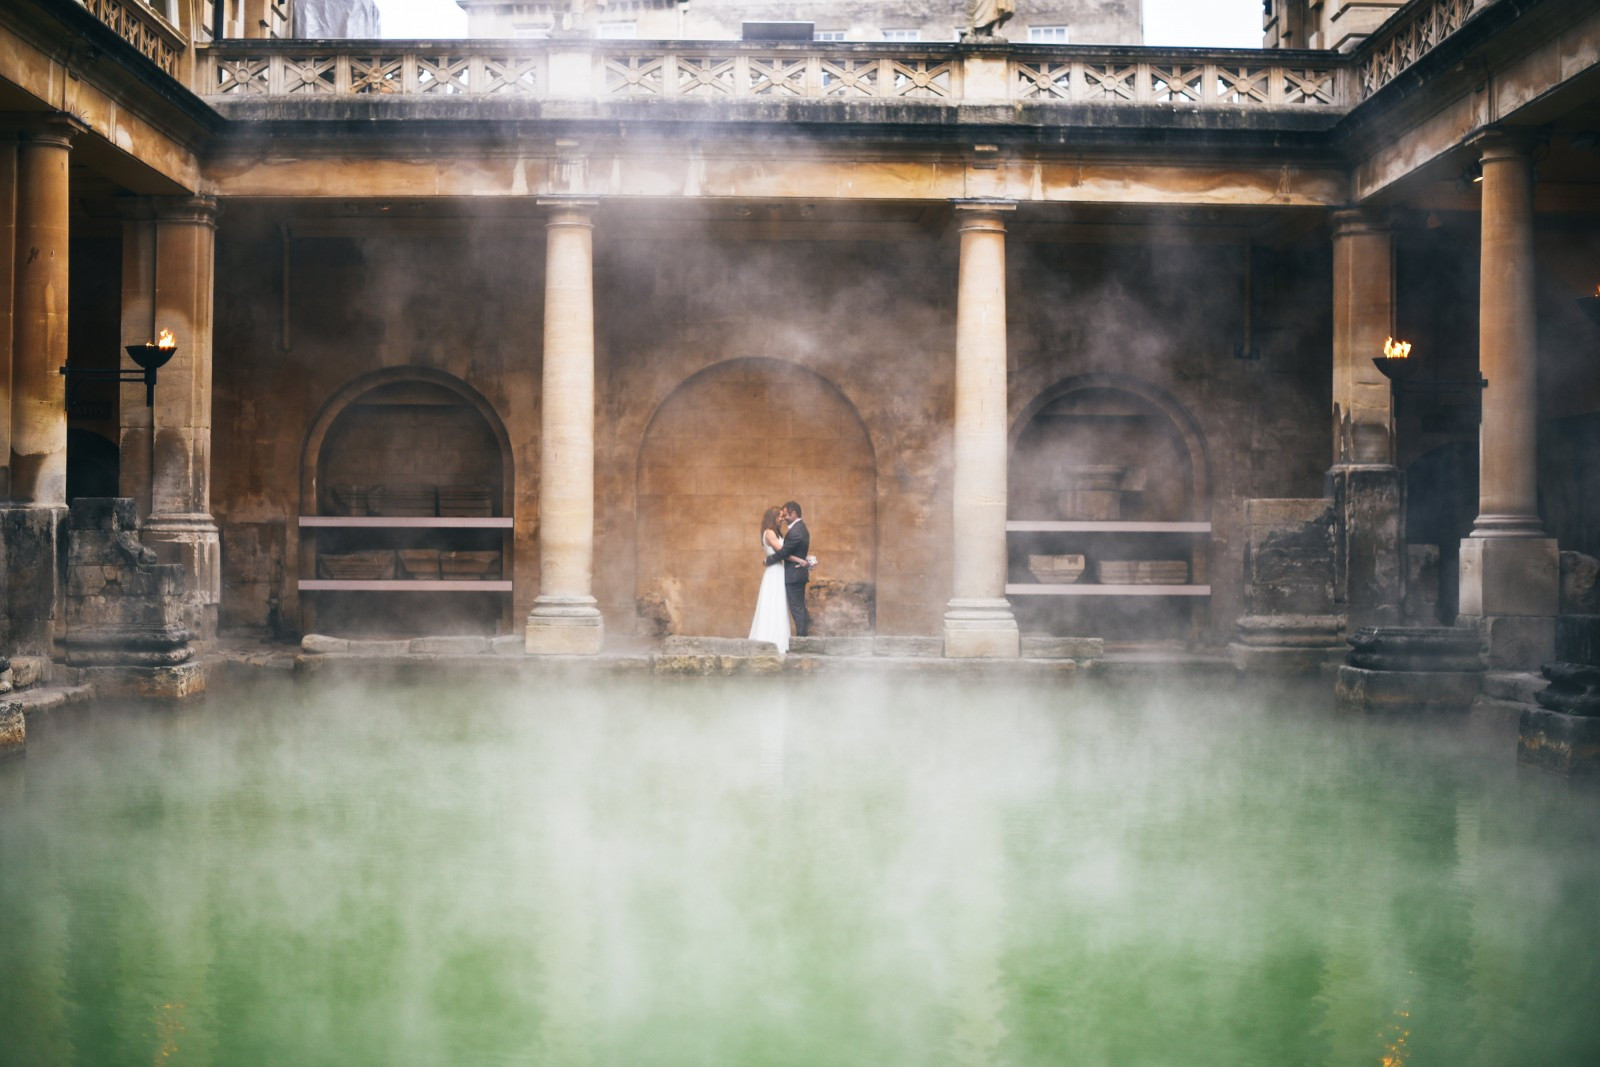 roman baths and pump room, bath wedding venue, bath historic venues